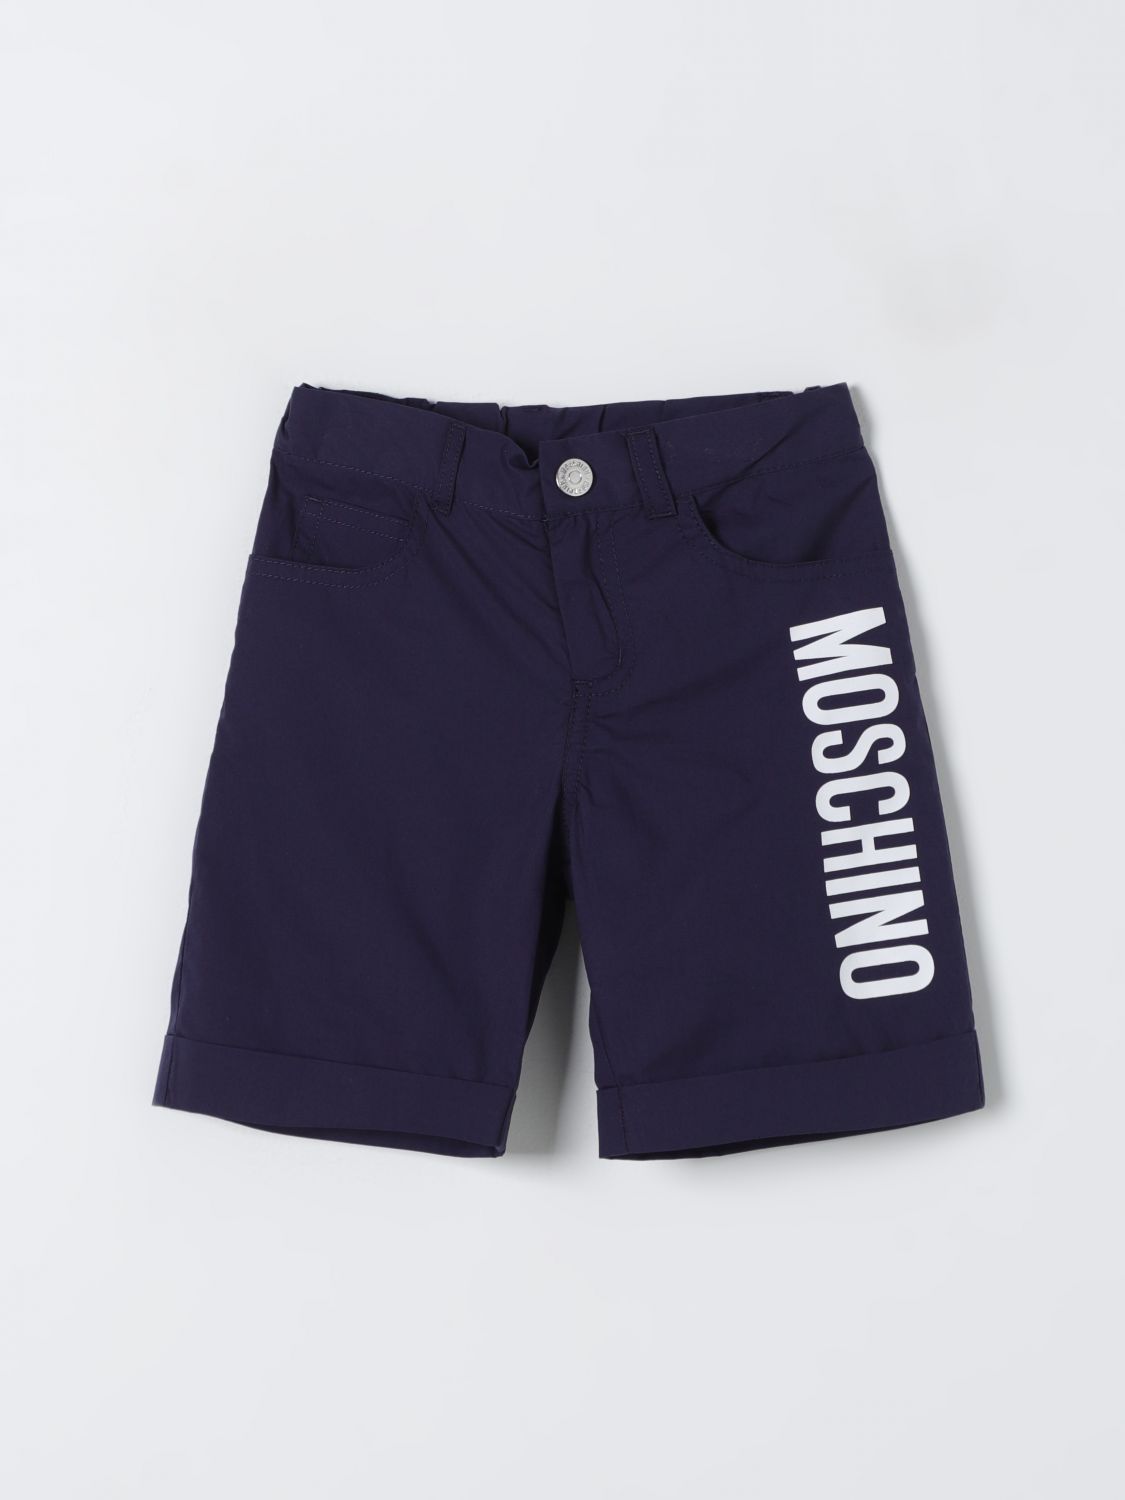 Moschino Kid Pants  Kids Color Blue